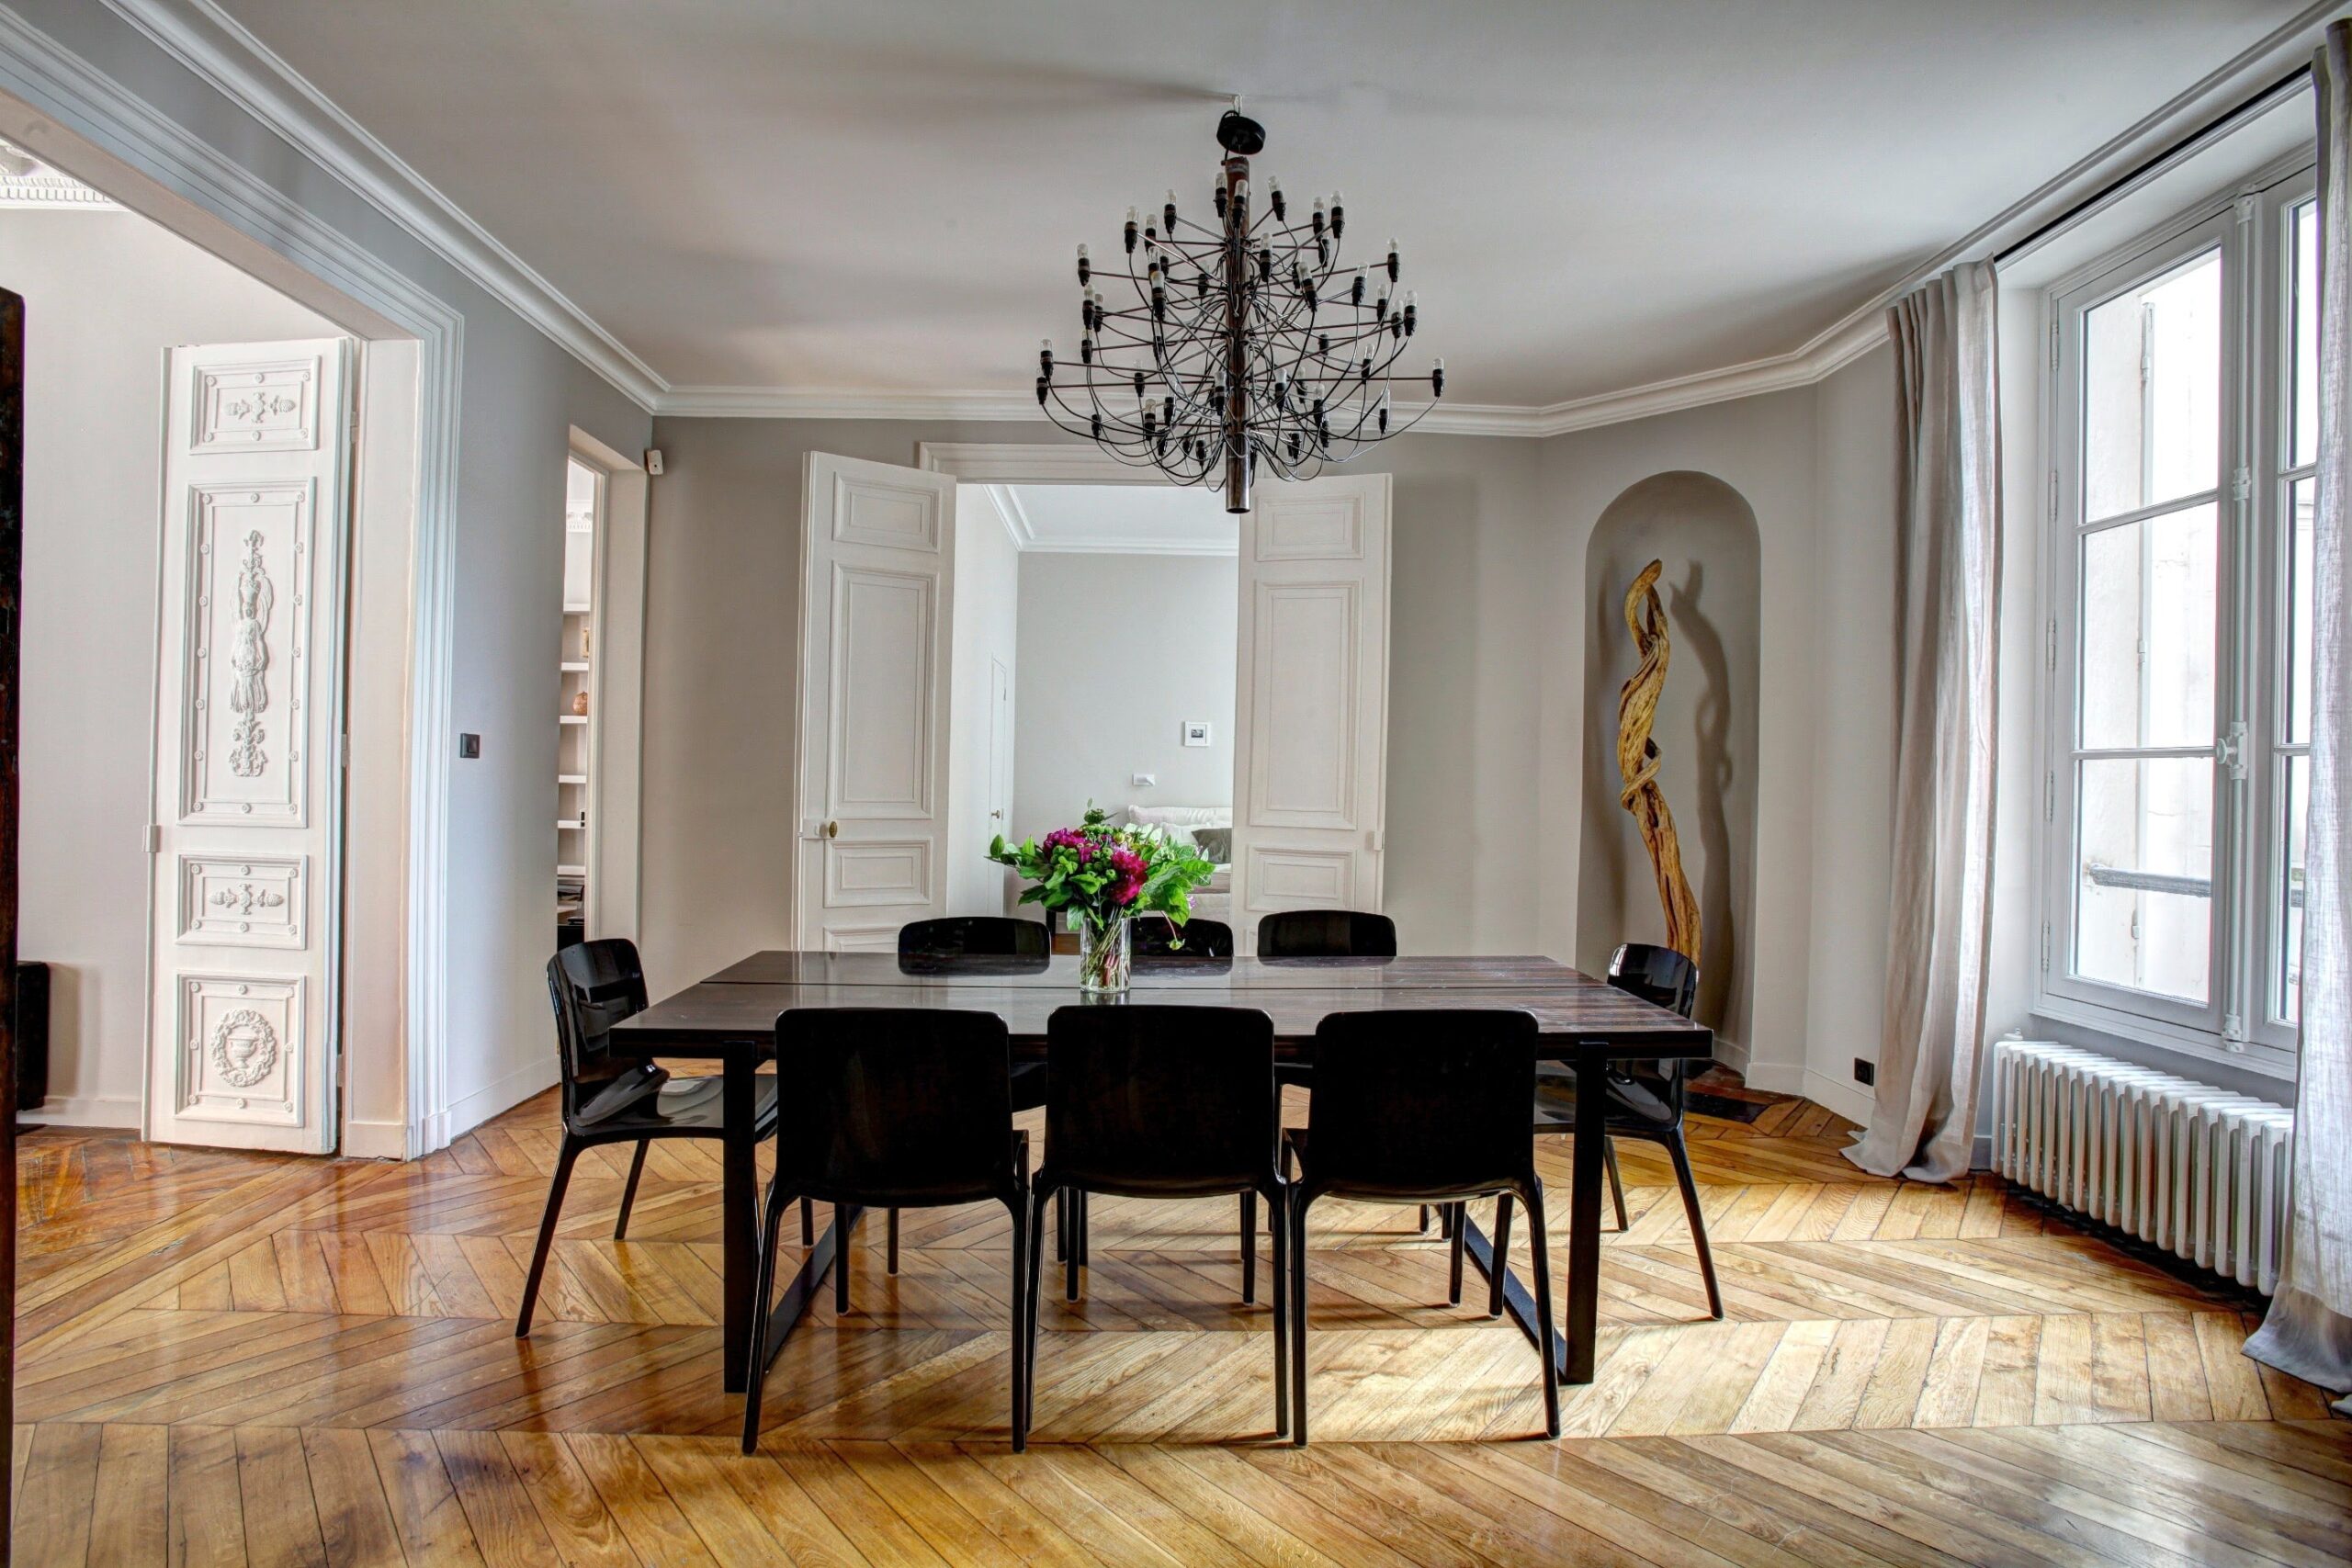 Spacious modern dining room with hardwood flooring